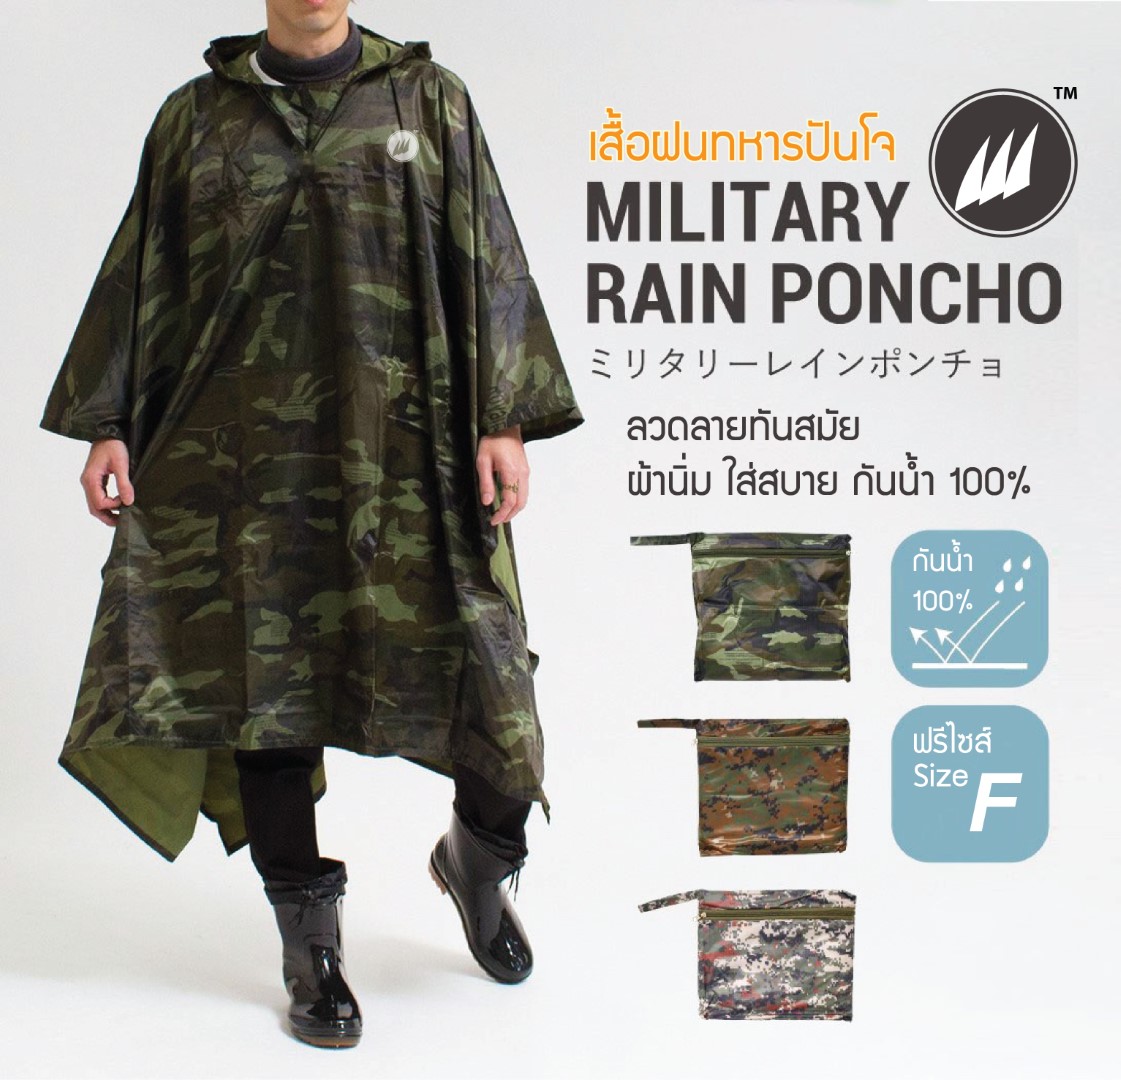 Raincoat ชุดกันฝน เสื้อกันฝน ลายทหาร ซิปยาว กันน้ำได้100% ใส่ได้ถึง3XL พร้อมถุงซิปเก็บเสื้ออย่างดี คละลาย